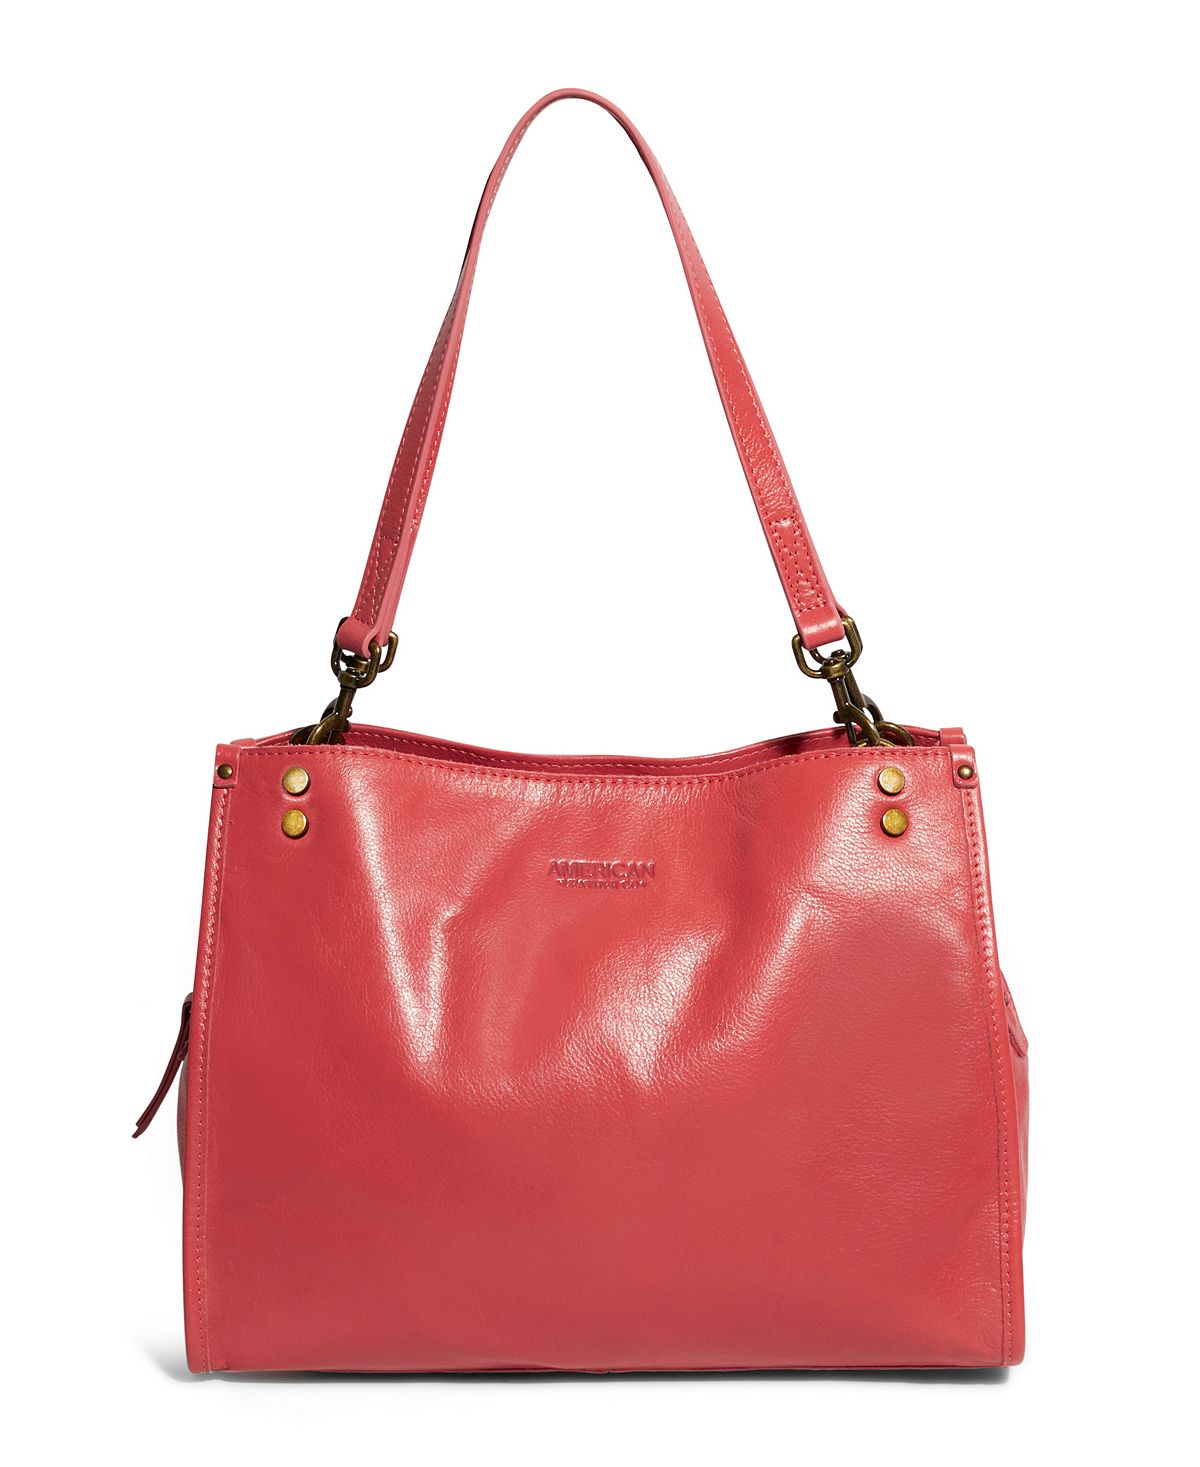 Женская сумка-саквояж Lenox с тройным входом American Leather Co. женская большая сумка hope american leather co